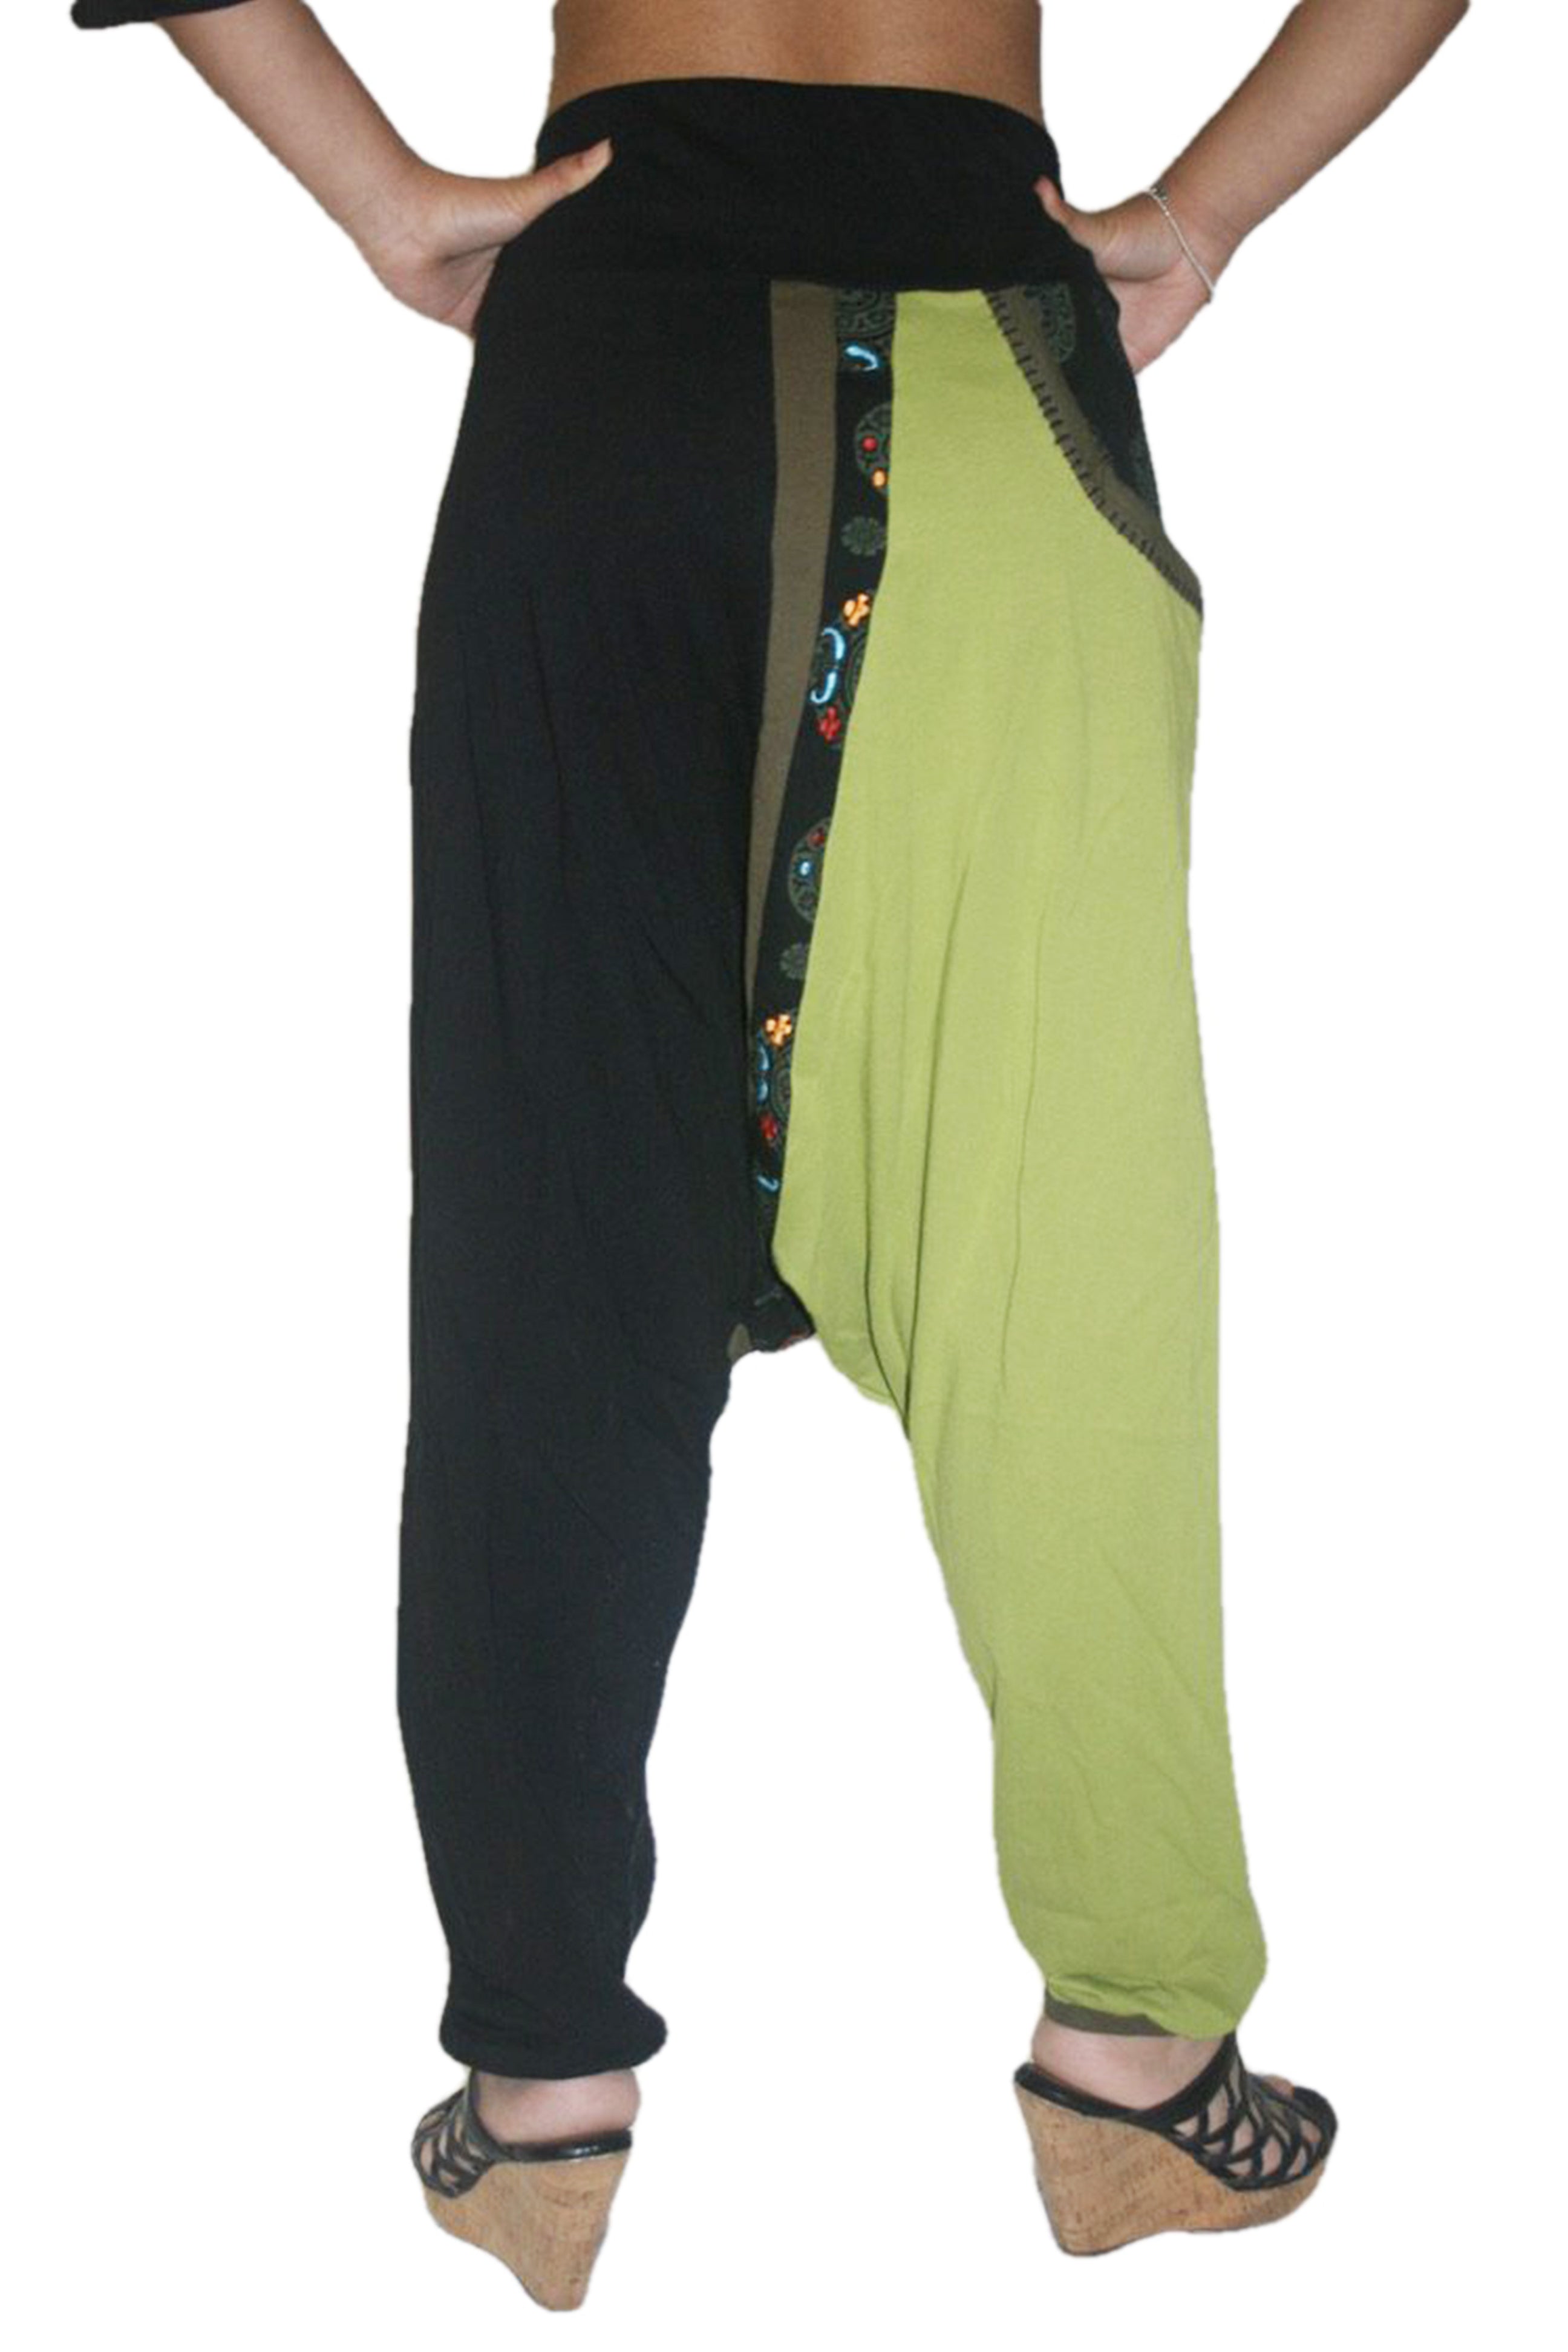 Women Men Pants Boho Funky Hippie Stylish Ninja Harem Pants Trousers in  Heather Gray Cotton Jersey P022 - Etsy